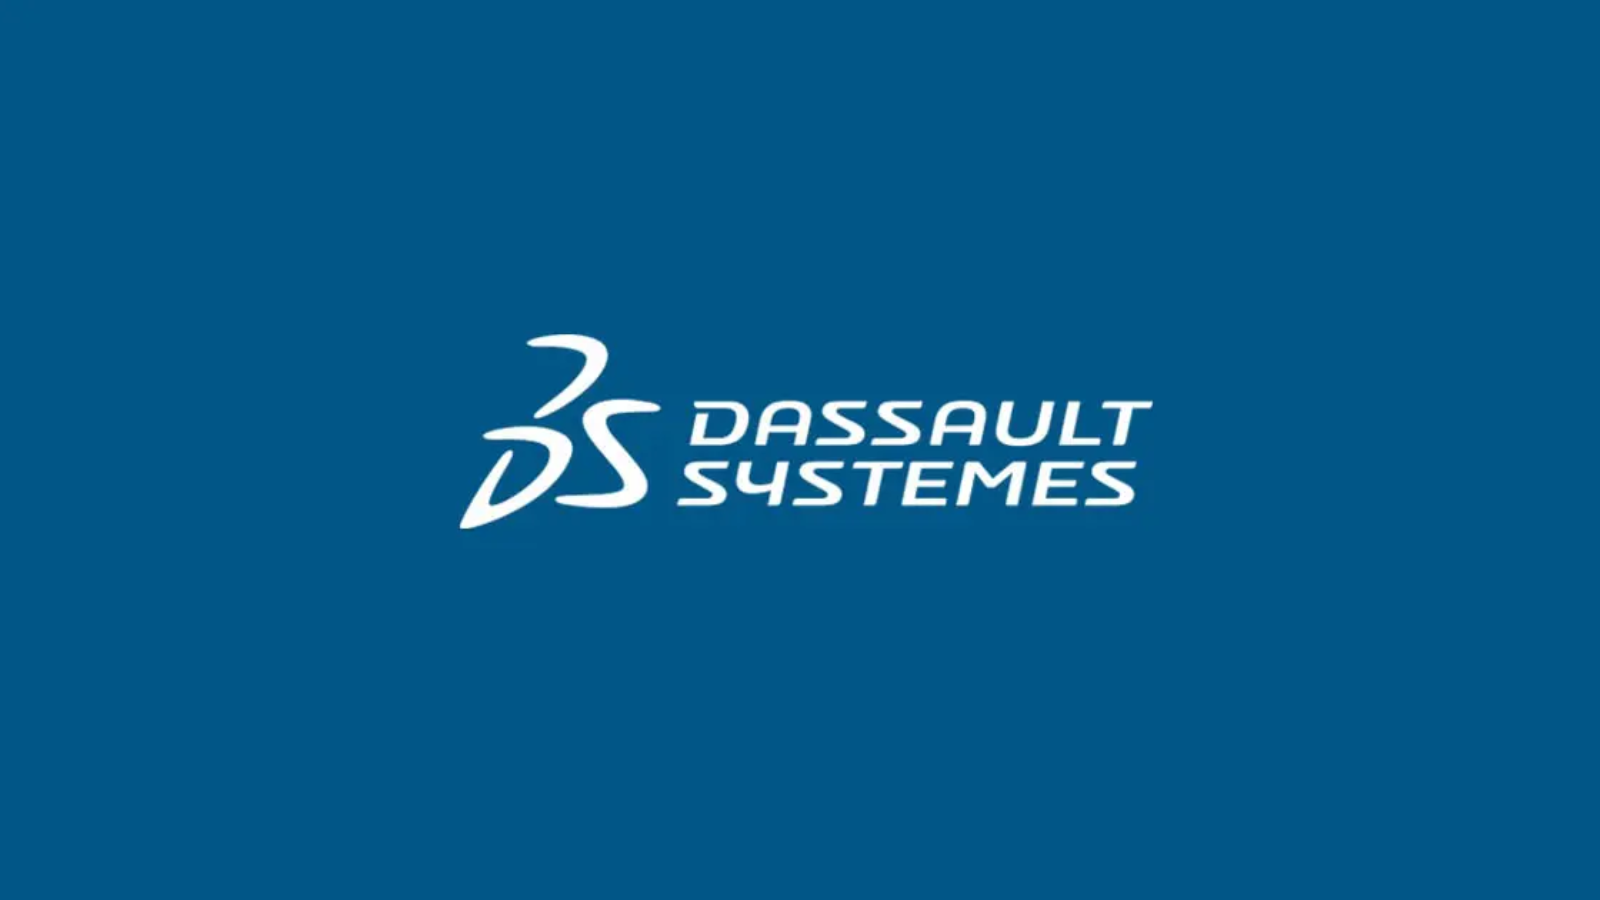 Dassault Systèmes Logo